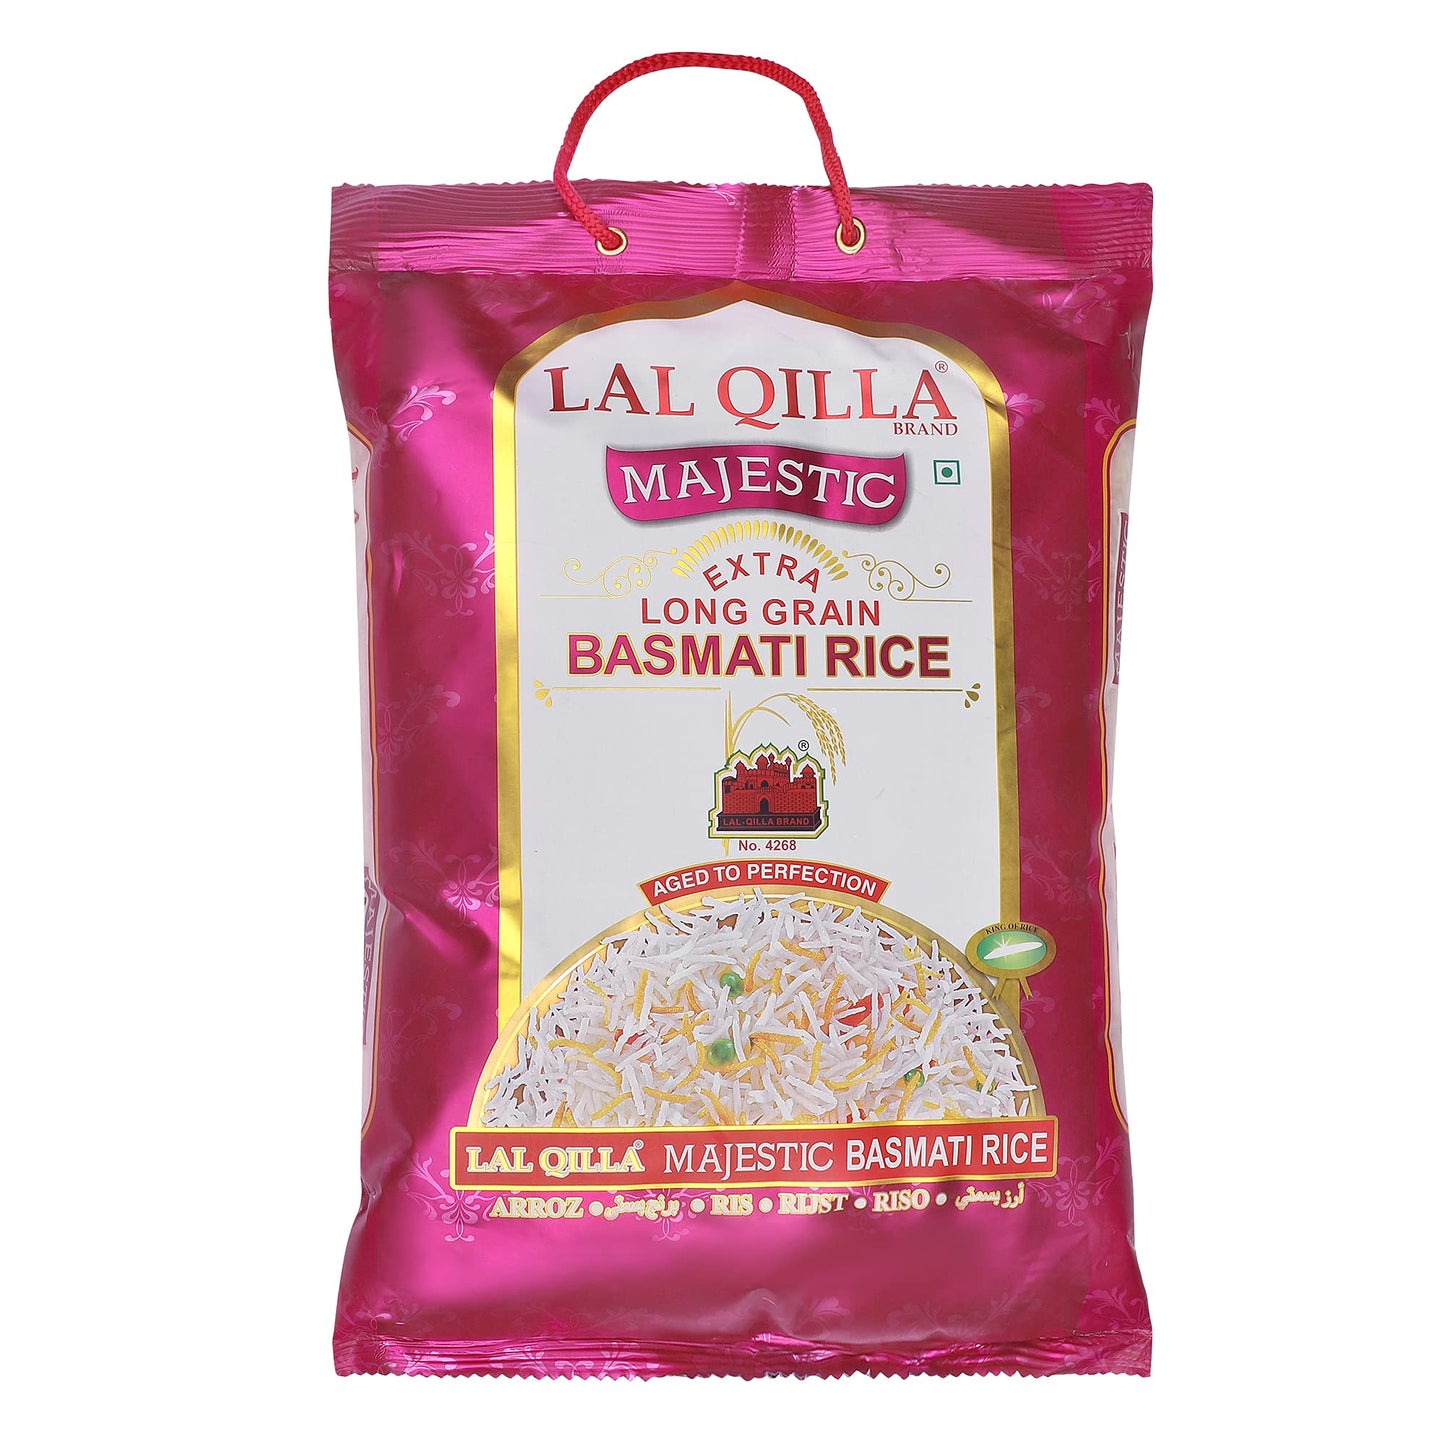 Lal Qilla Majestic Basmati Rice 5kg